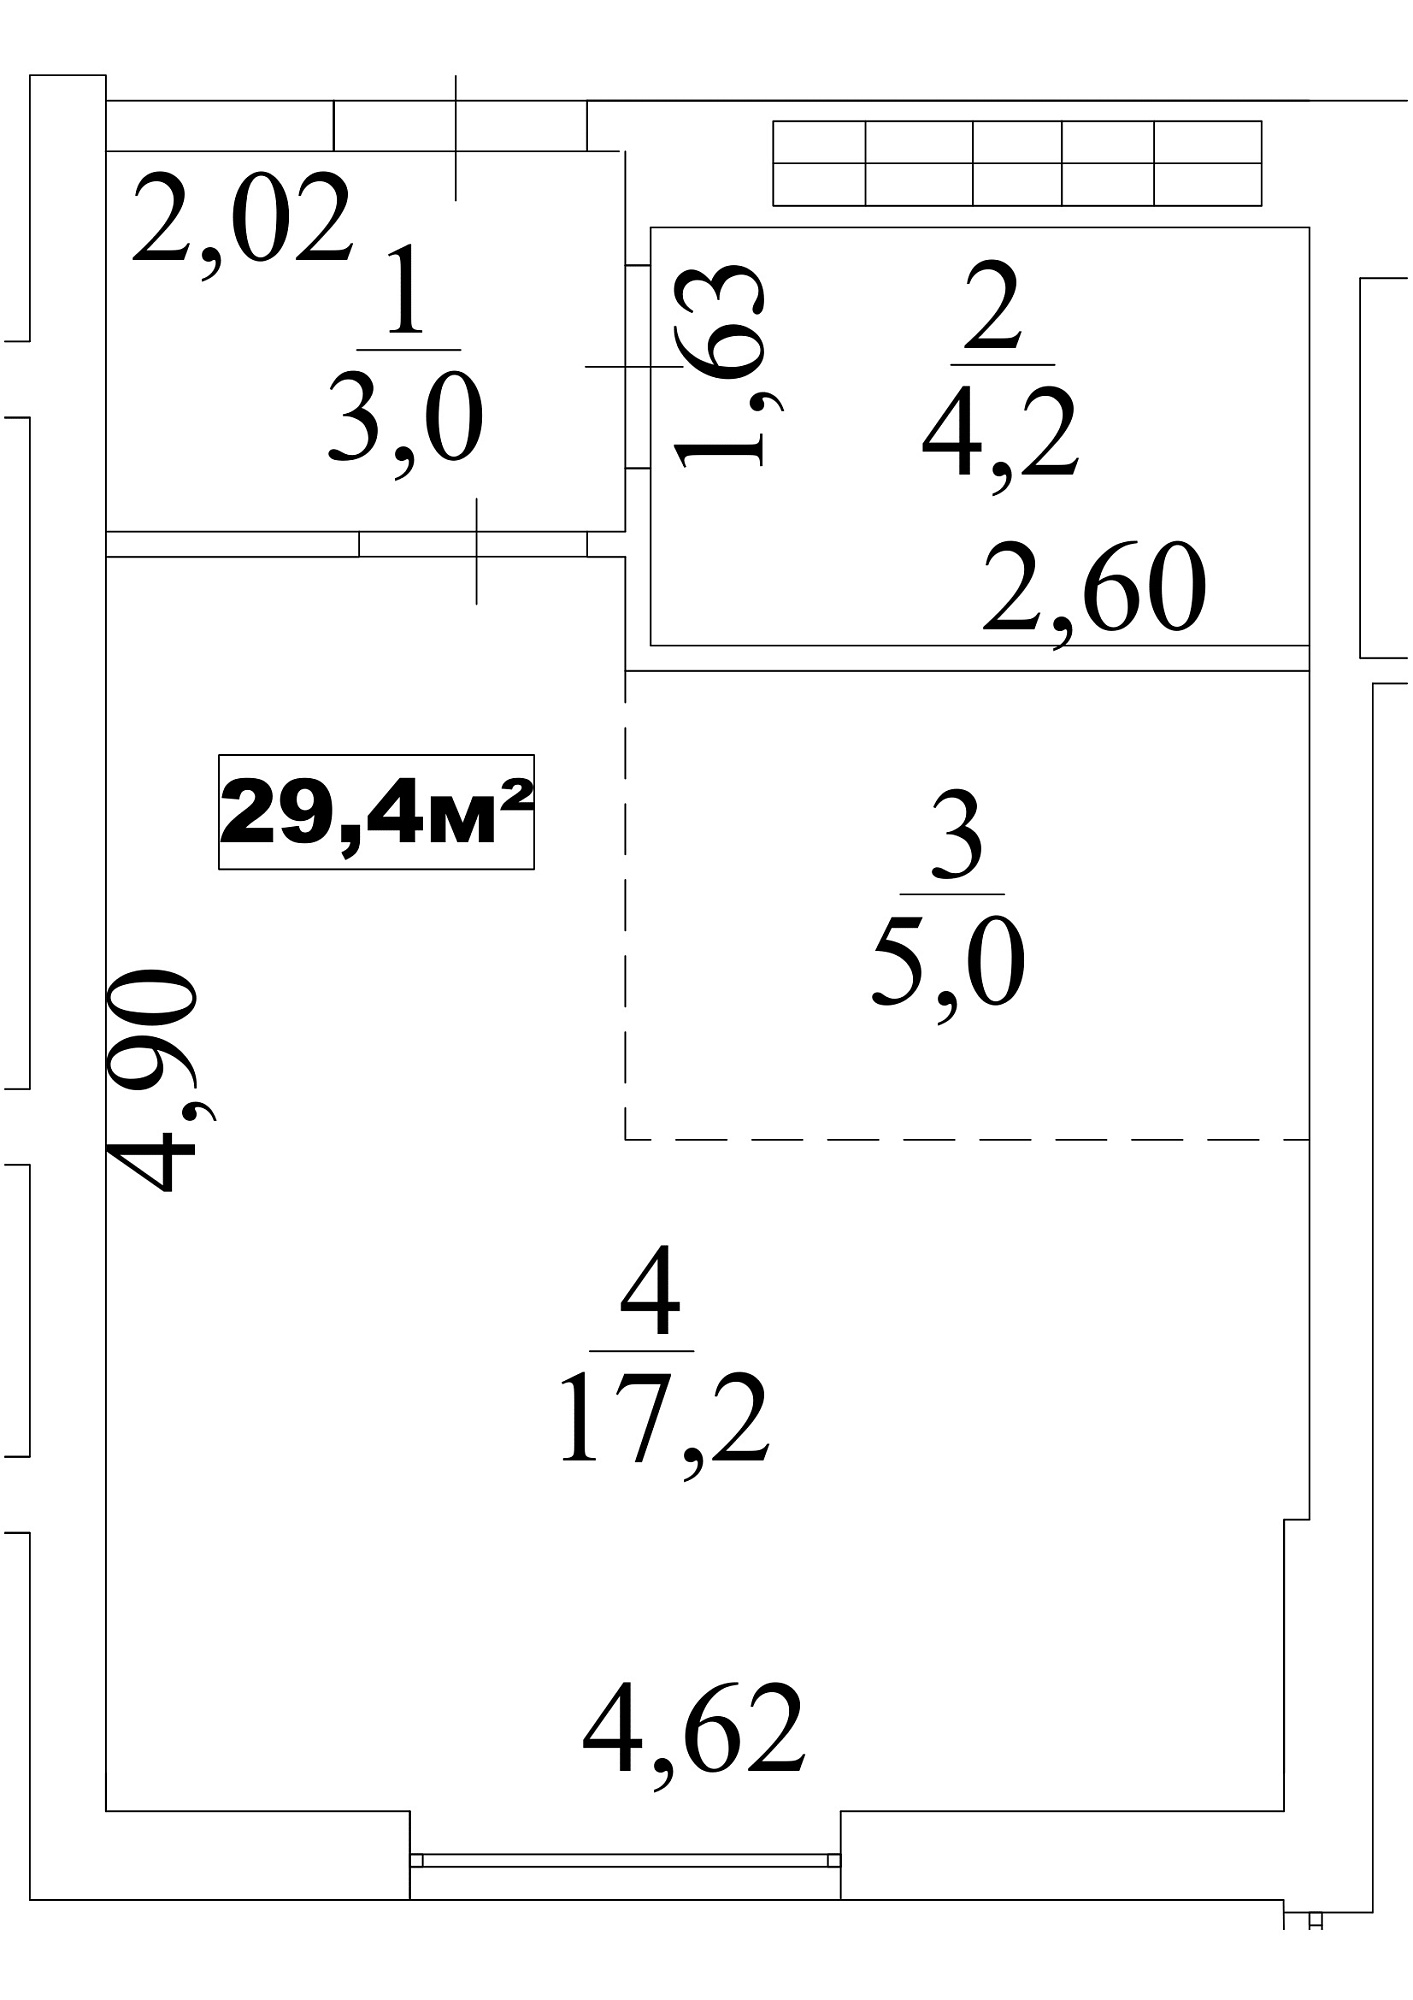 Планировка Smart-квартира площей 29.4м2, AB-10-08/00072.